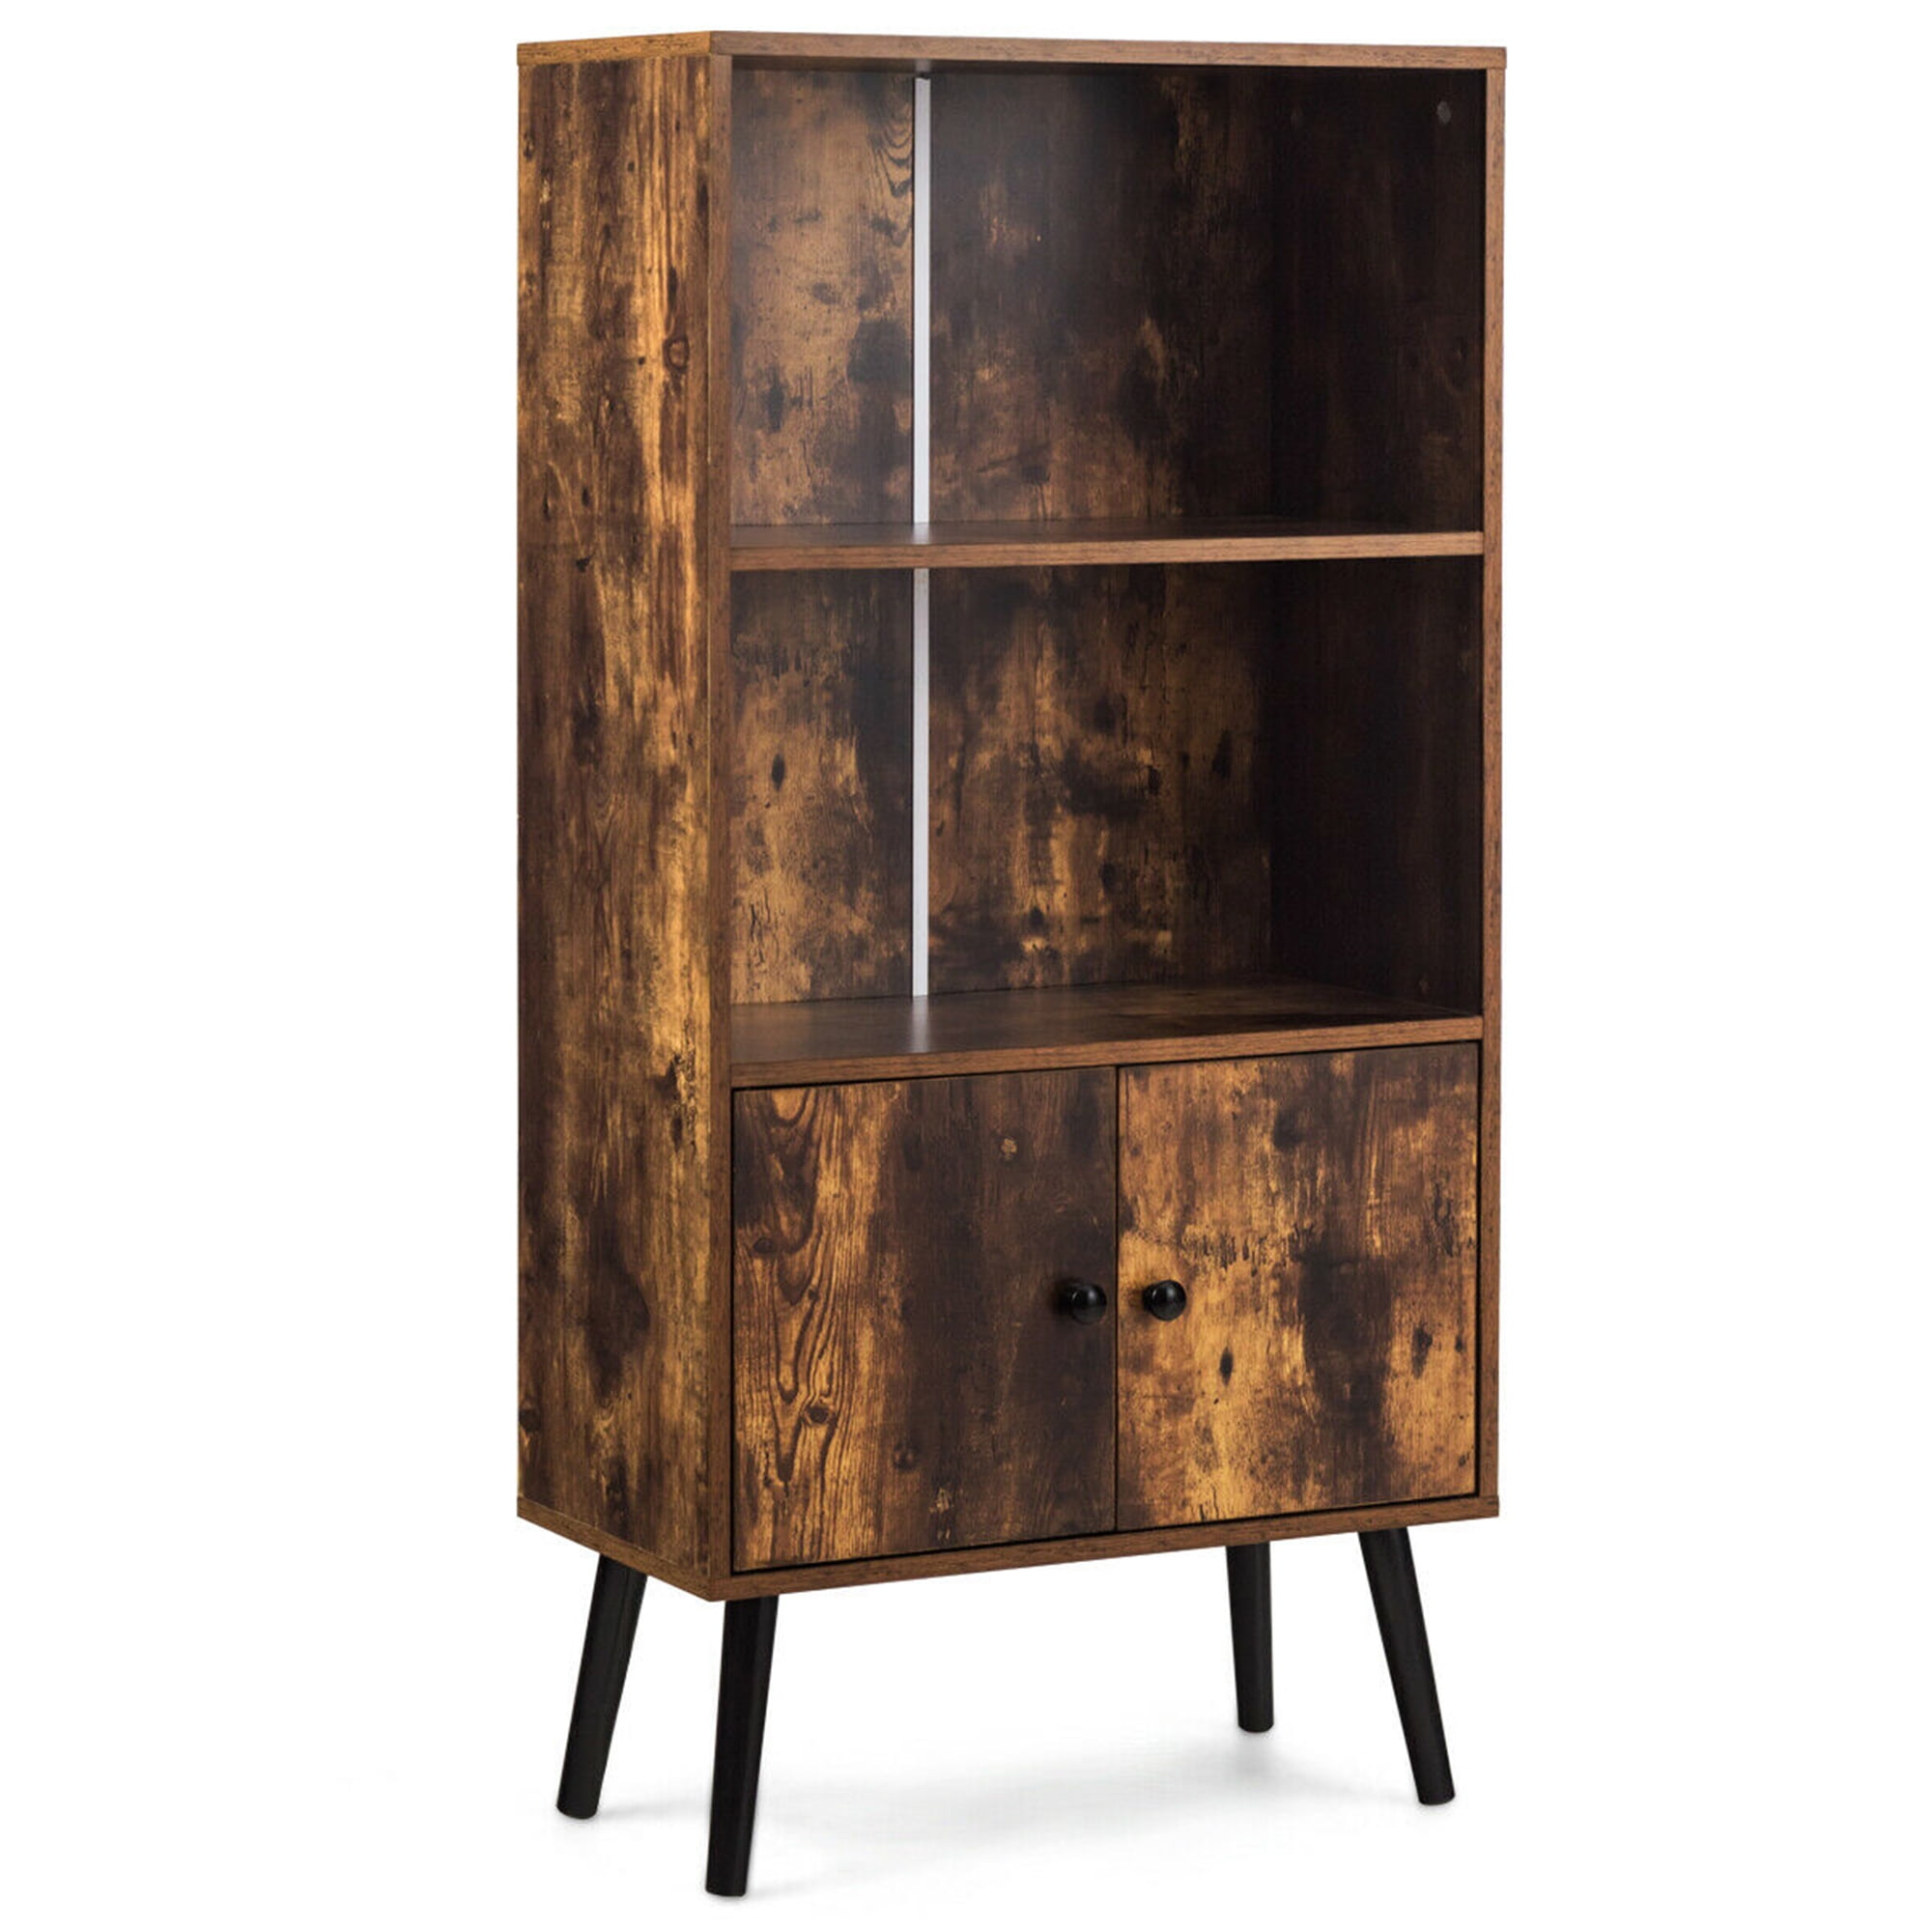 Details about   Rustic Gray Wooden 5 Shelf Bookcase w/ Doors Storage Library Hidden Open Shelves 